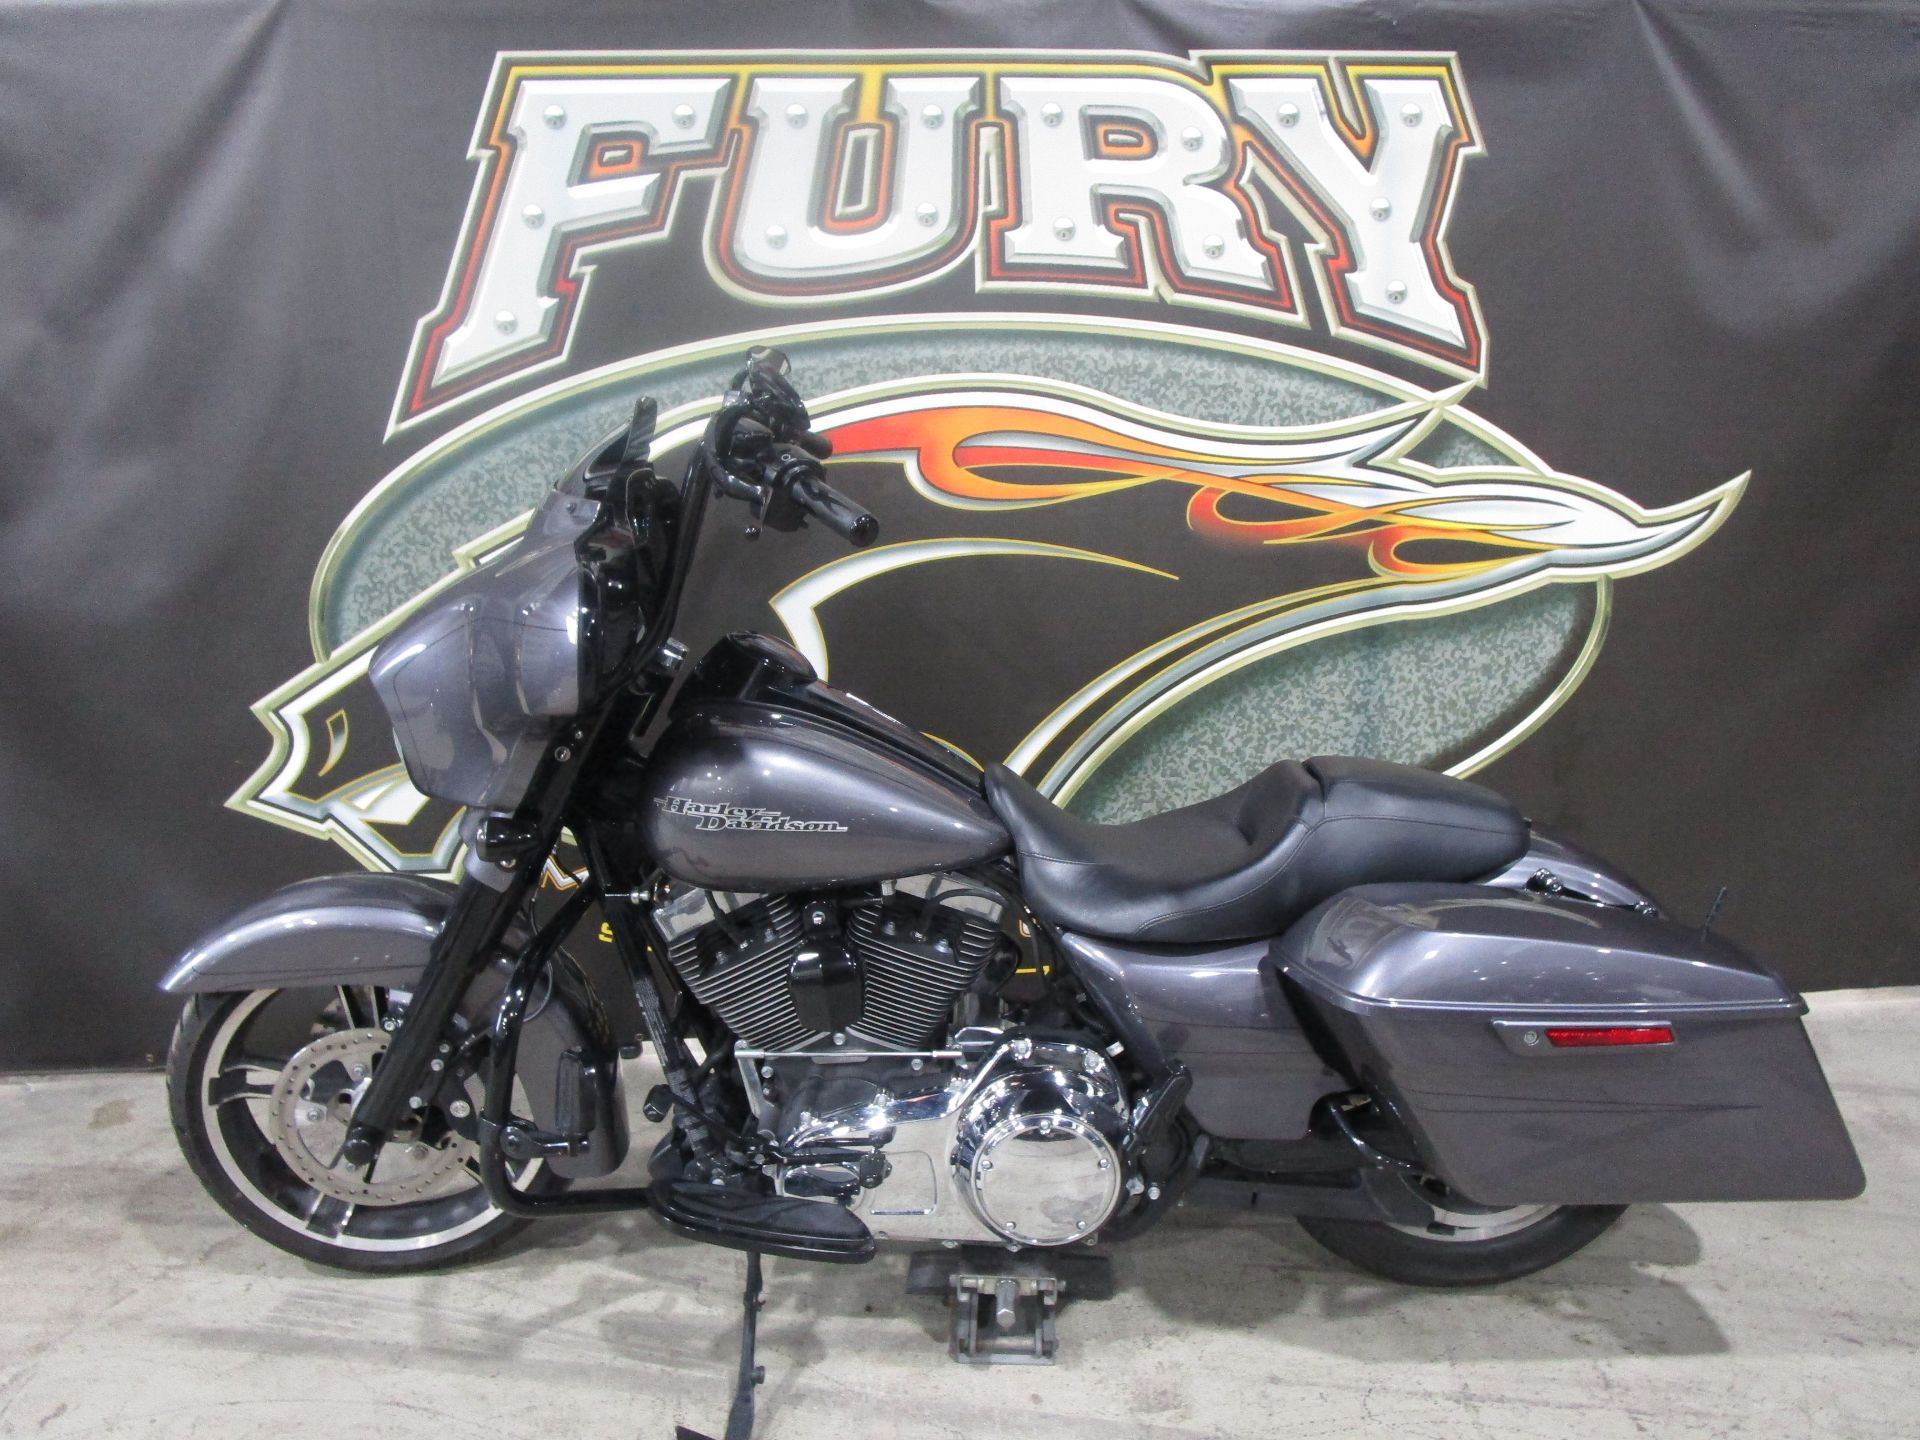 2015 Harley-Davidson Street Glide® Special in South Saint Paul, Minnesota - Photo 10